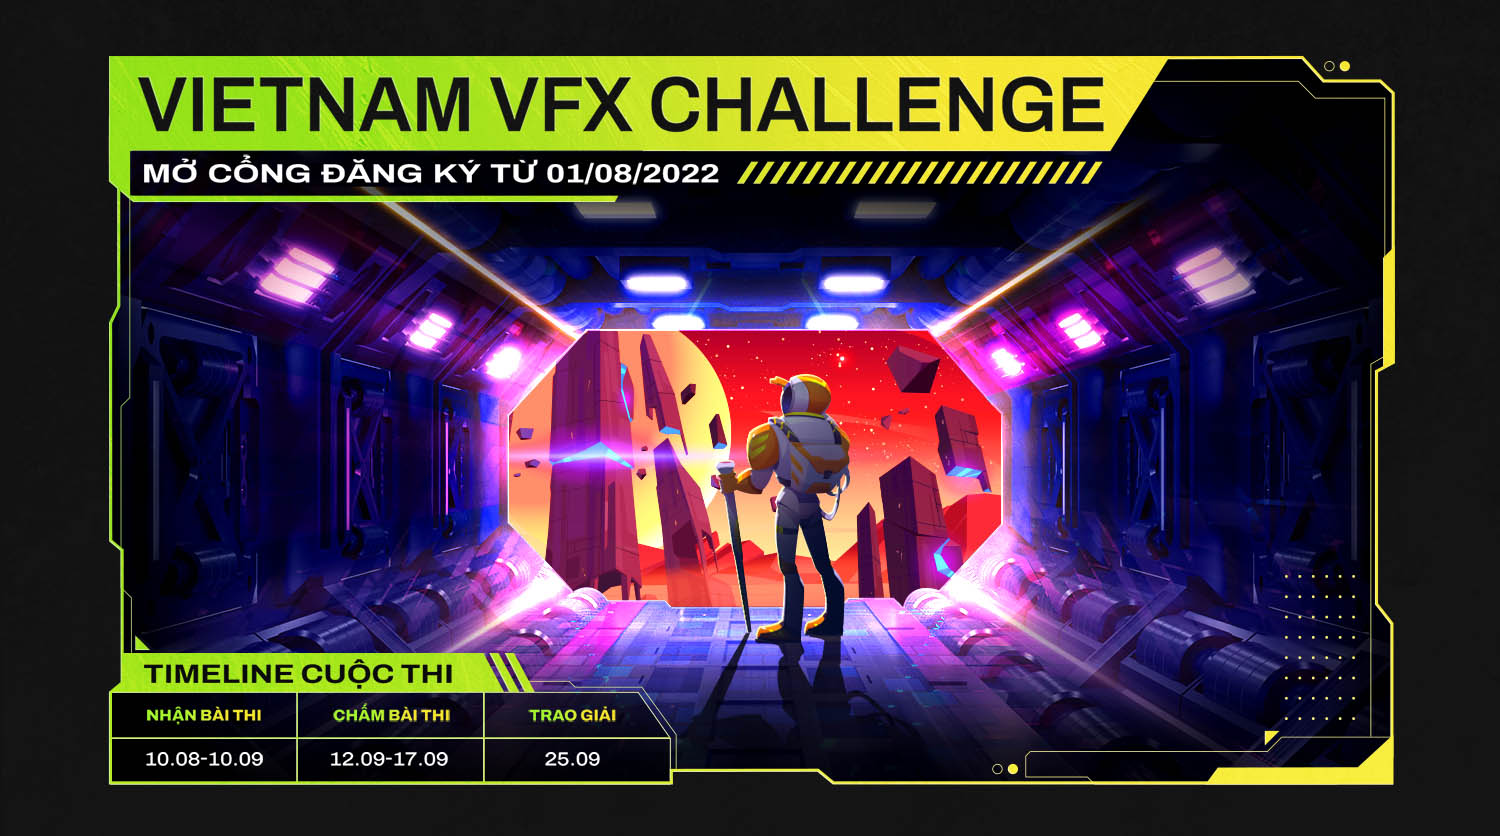 2-vietnam-vfx-challenge1-cuoc-thi-sang-tao-ky-xao-hinh-anh-danh-cho-gioi-tre-viet-nam